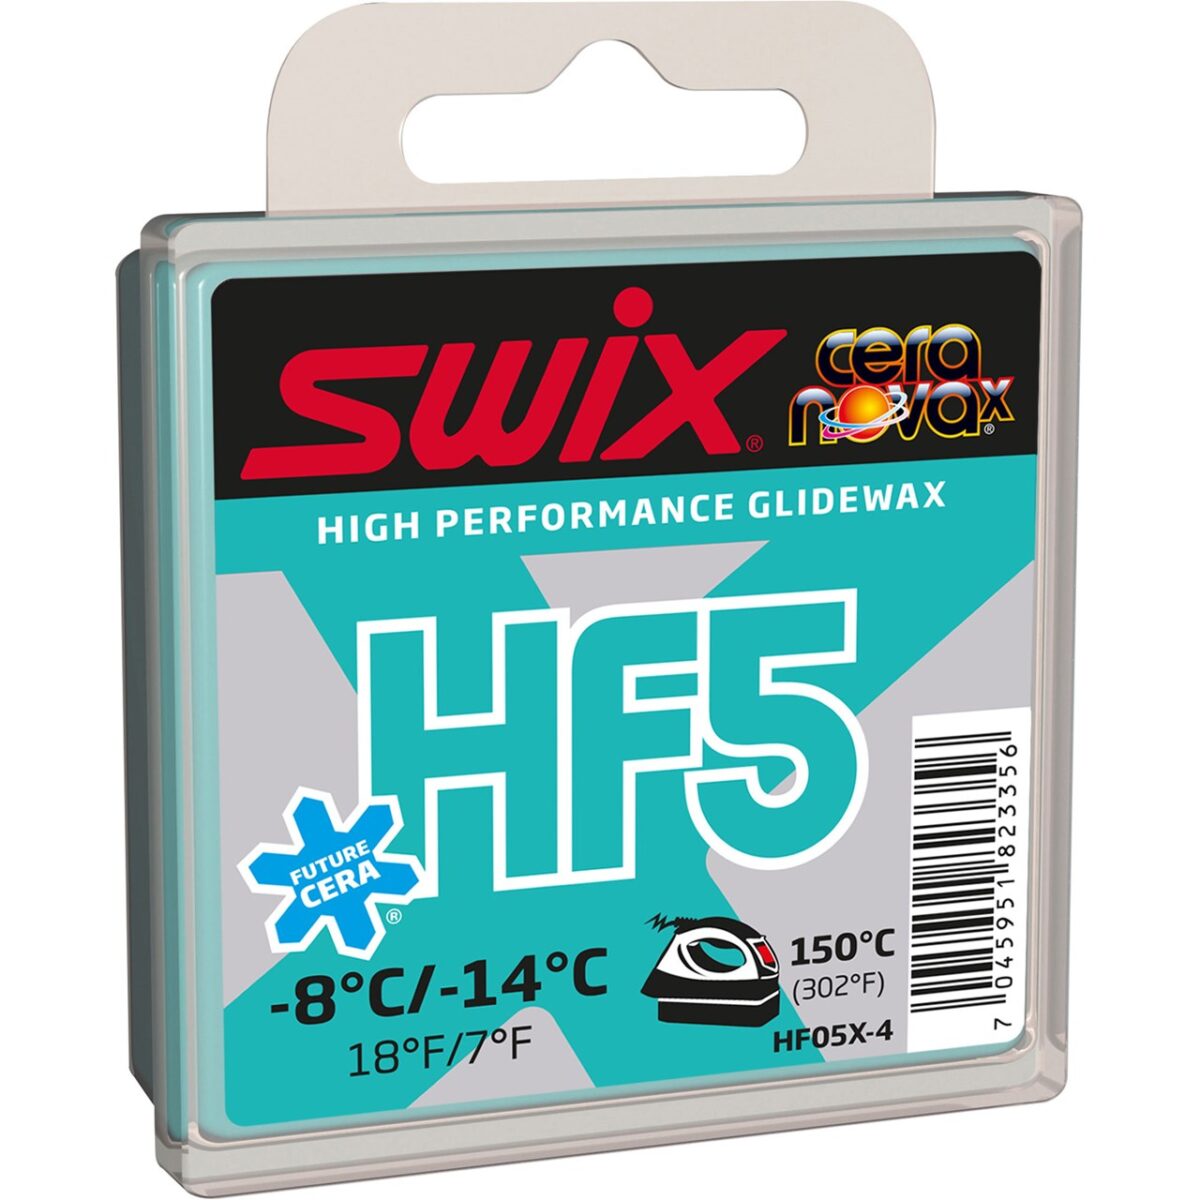 Swix HF5X Turquoise, -8 °C/-14 °C, 40g